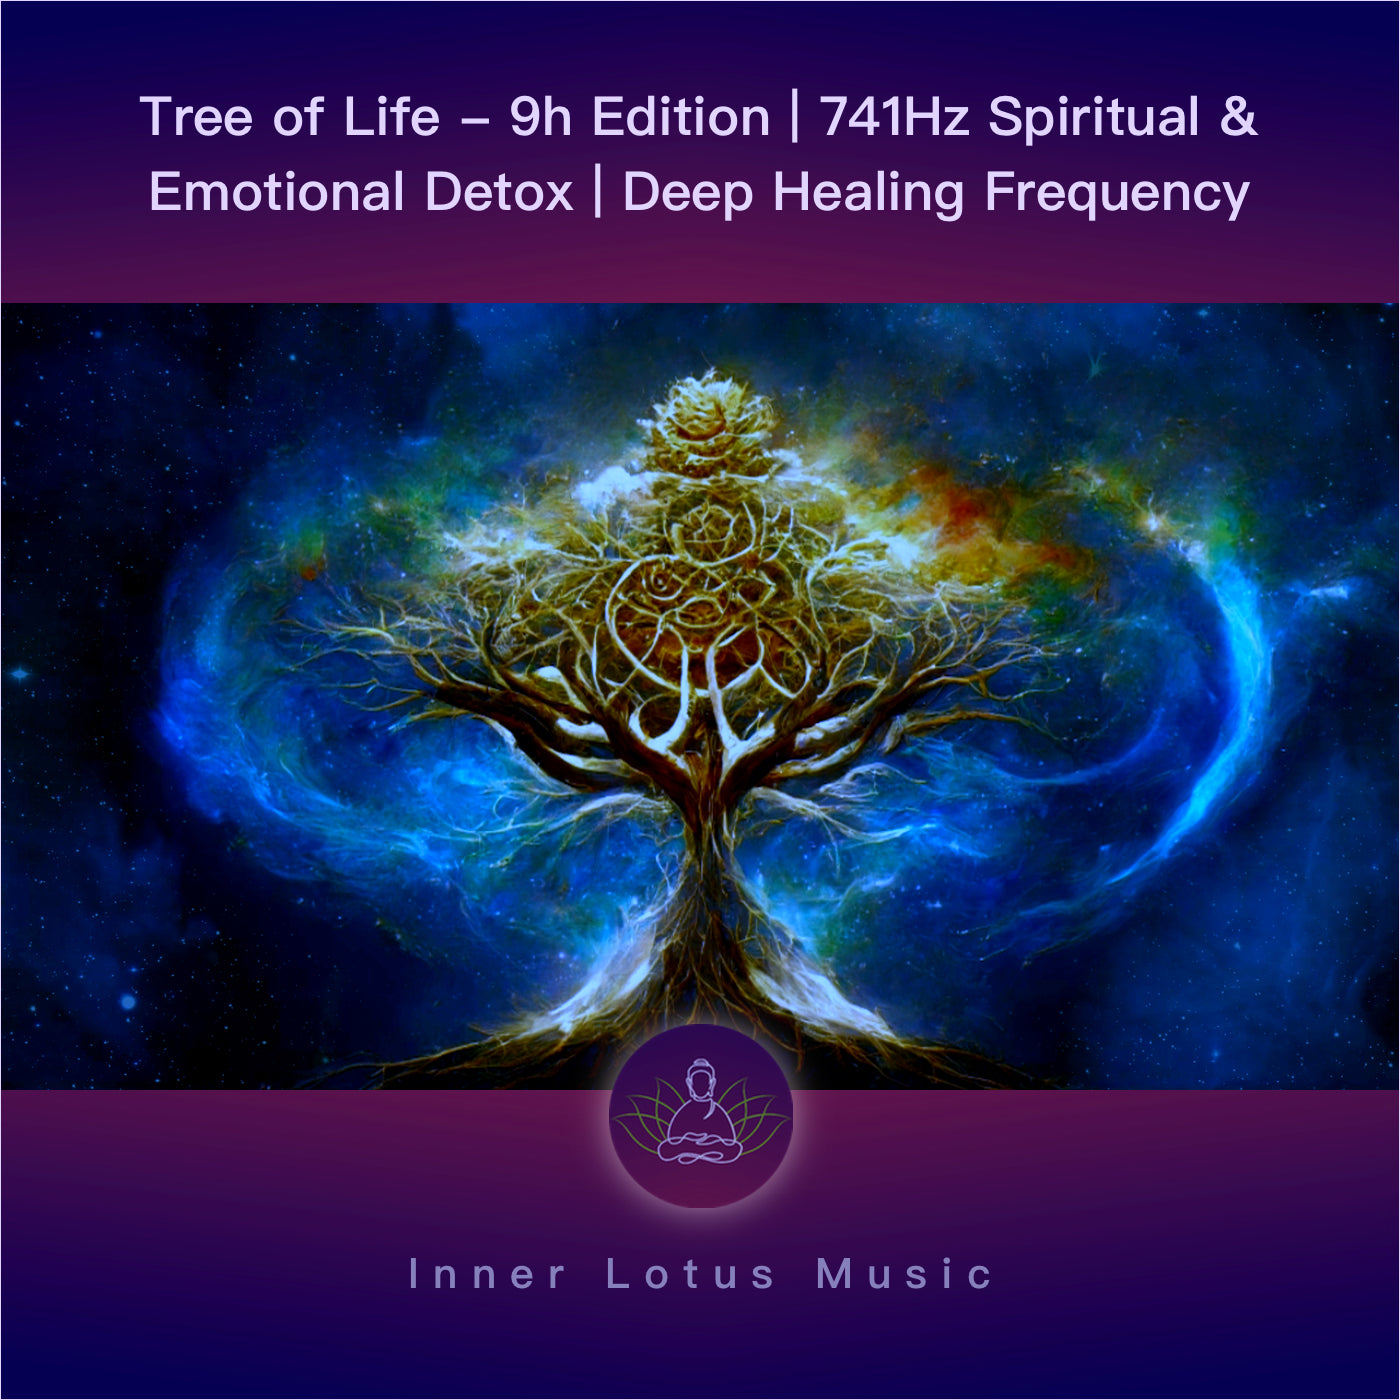 Tree of Life - 9h Edition | 741Hz Spiritual & Emotional Detox | Deep Healing Frequency